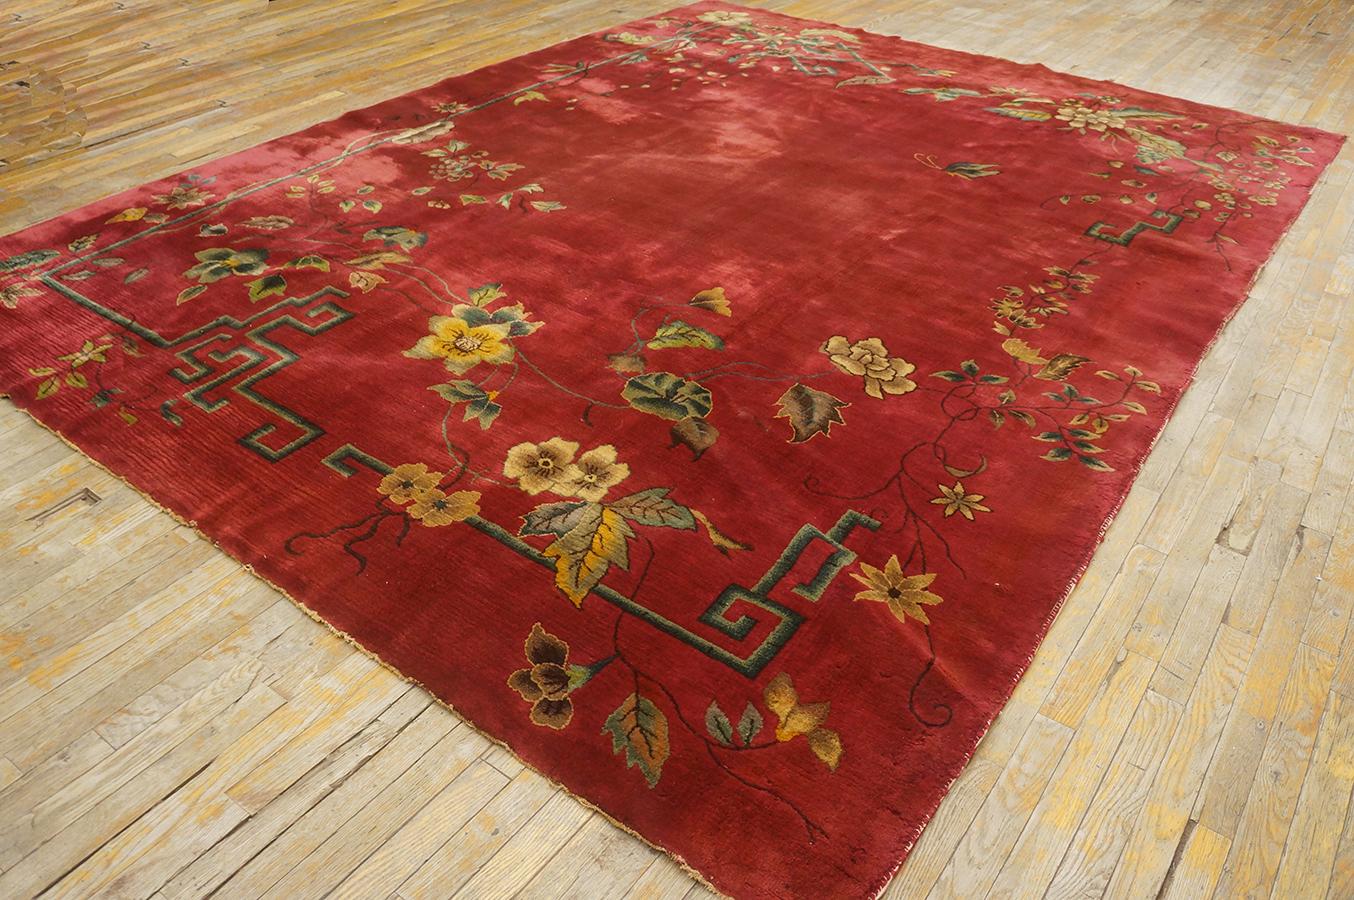 1920s Chinese Art Deco Carpet ( 8'10